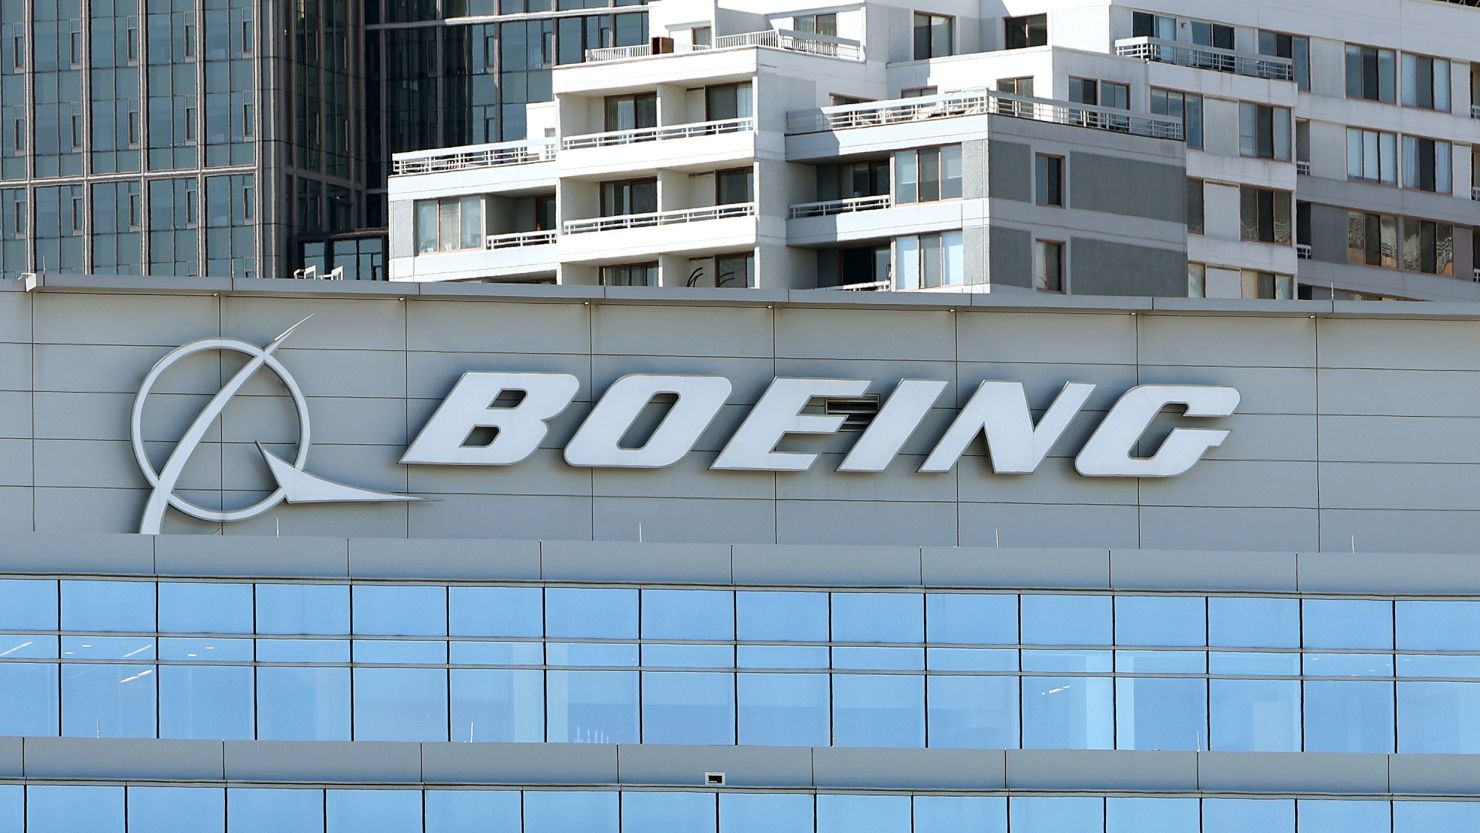 Boeing Whistleblower John Barnett's Tragic Suicide Revealed by Police Investigation